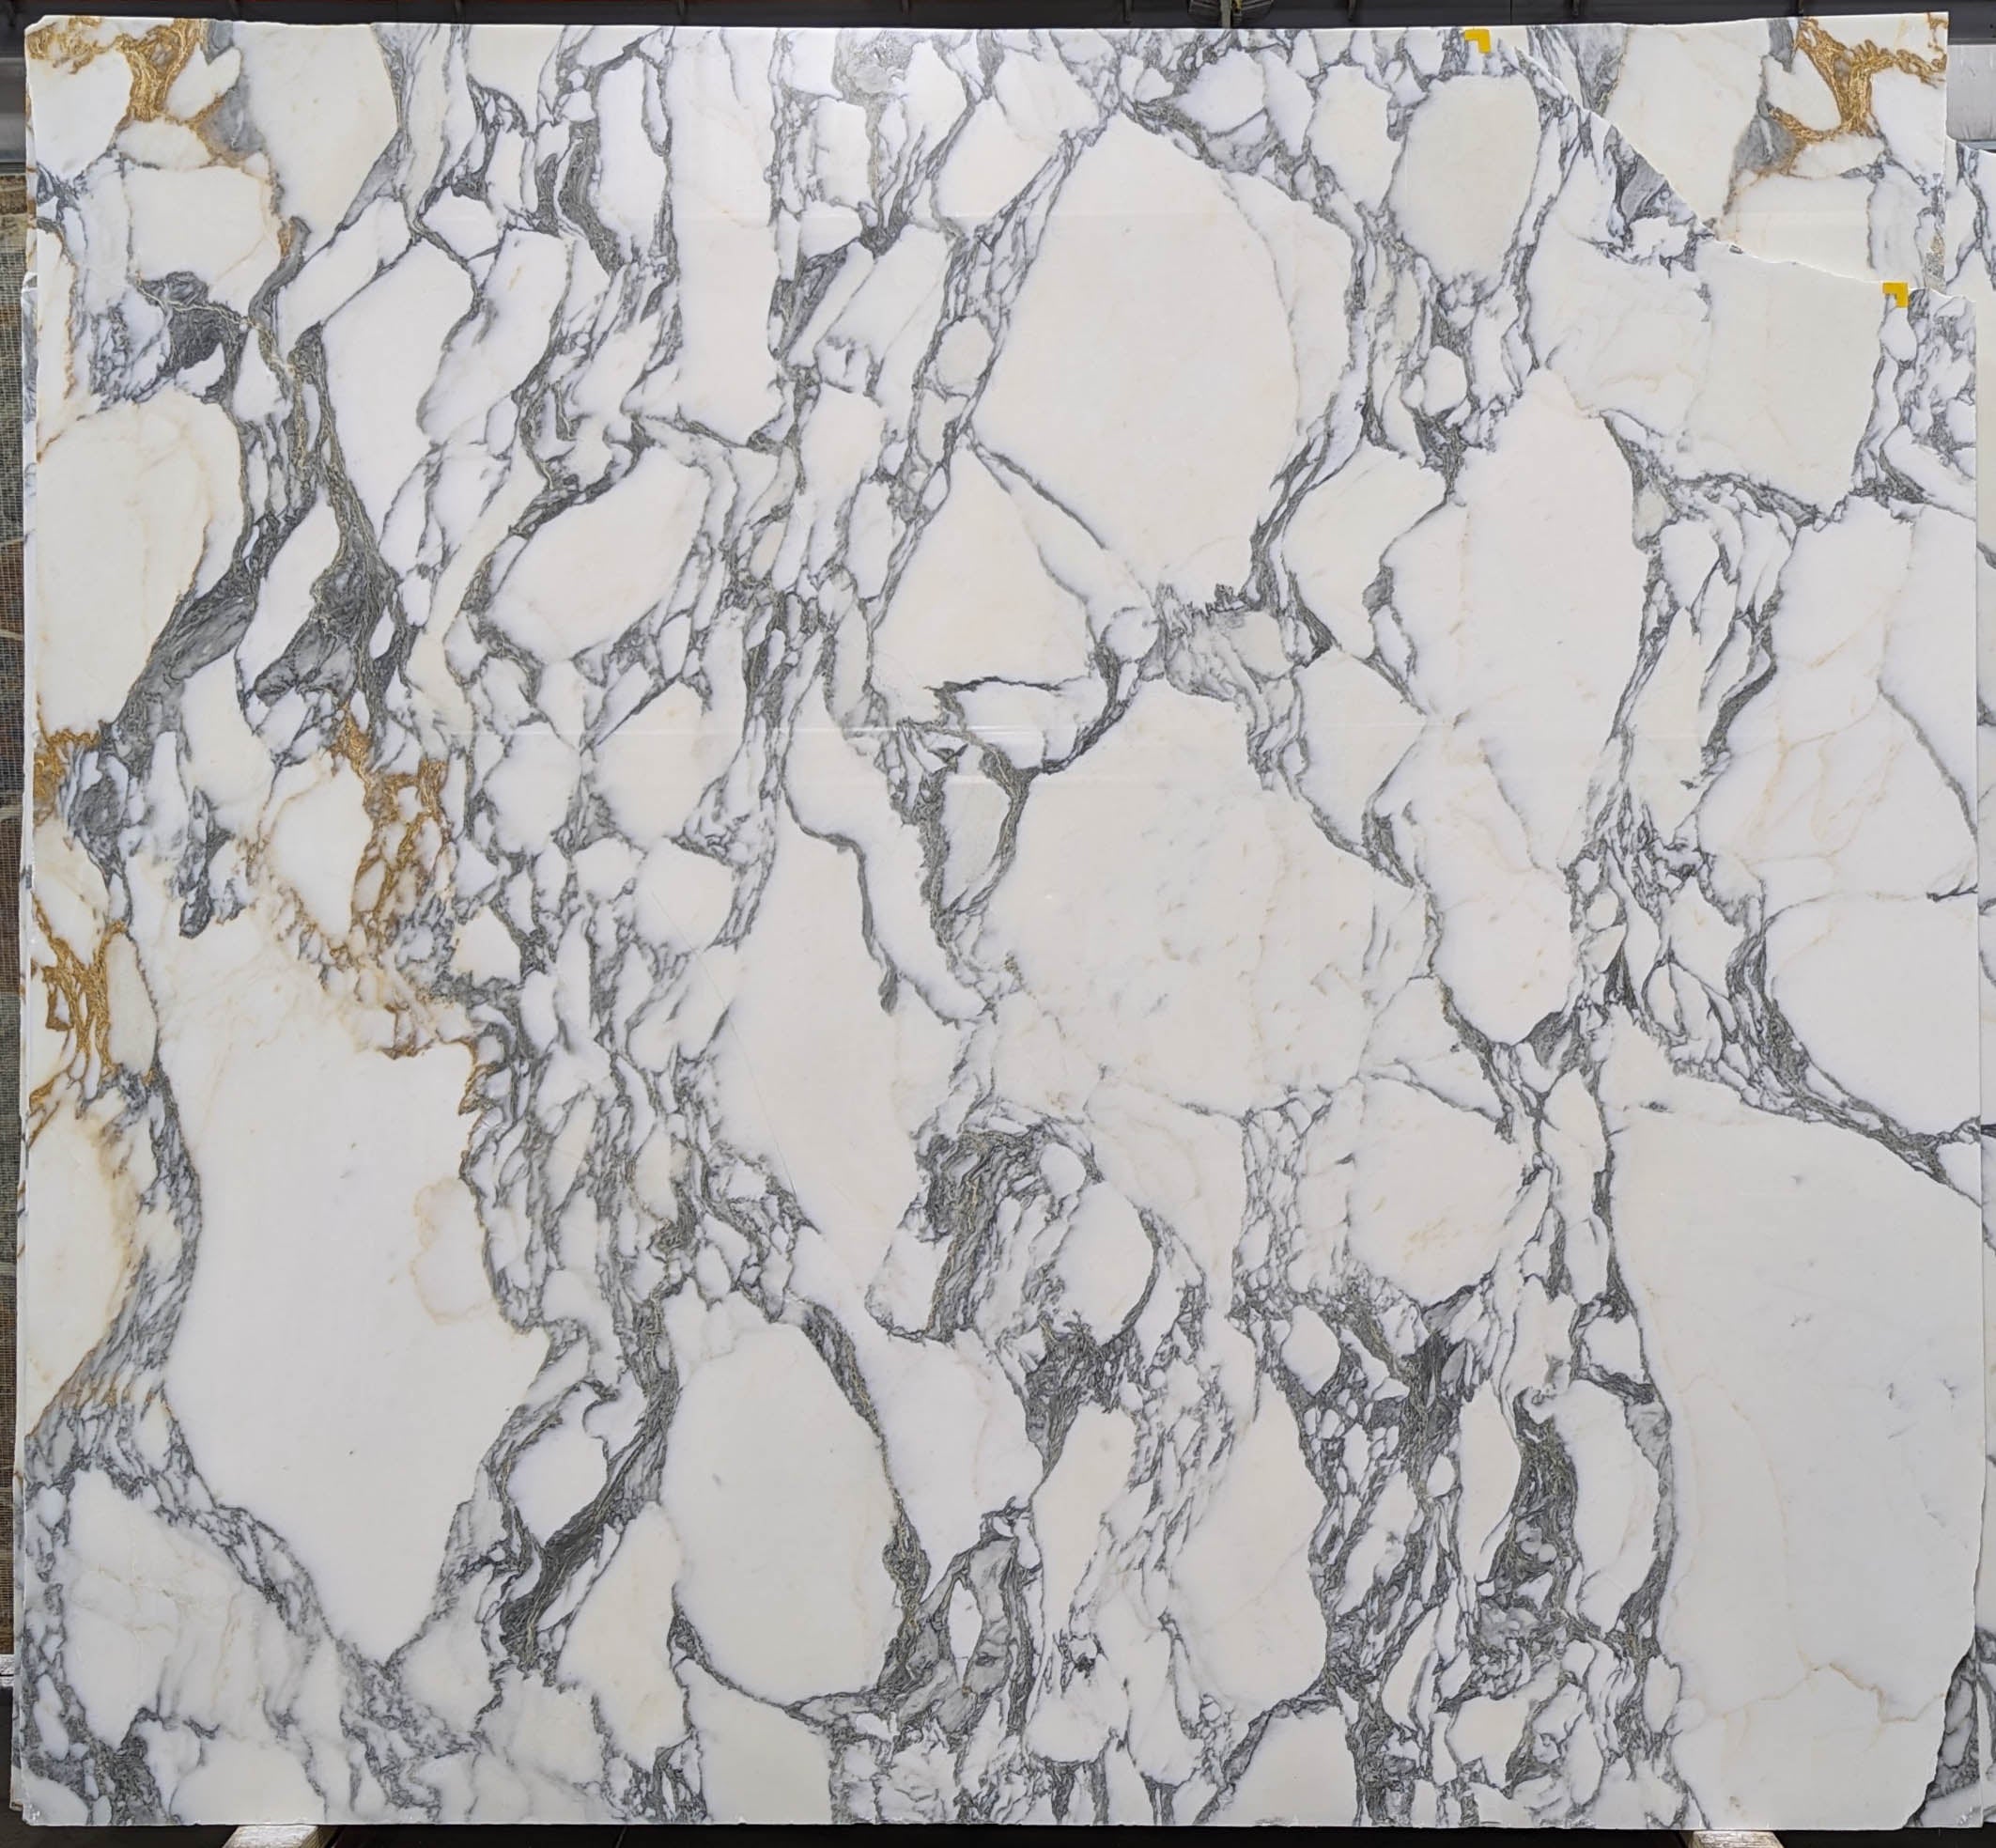  Arabescato Corchia A1 Select Marble Slab 3/4 - 28698#68 -  68x83 